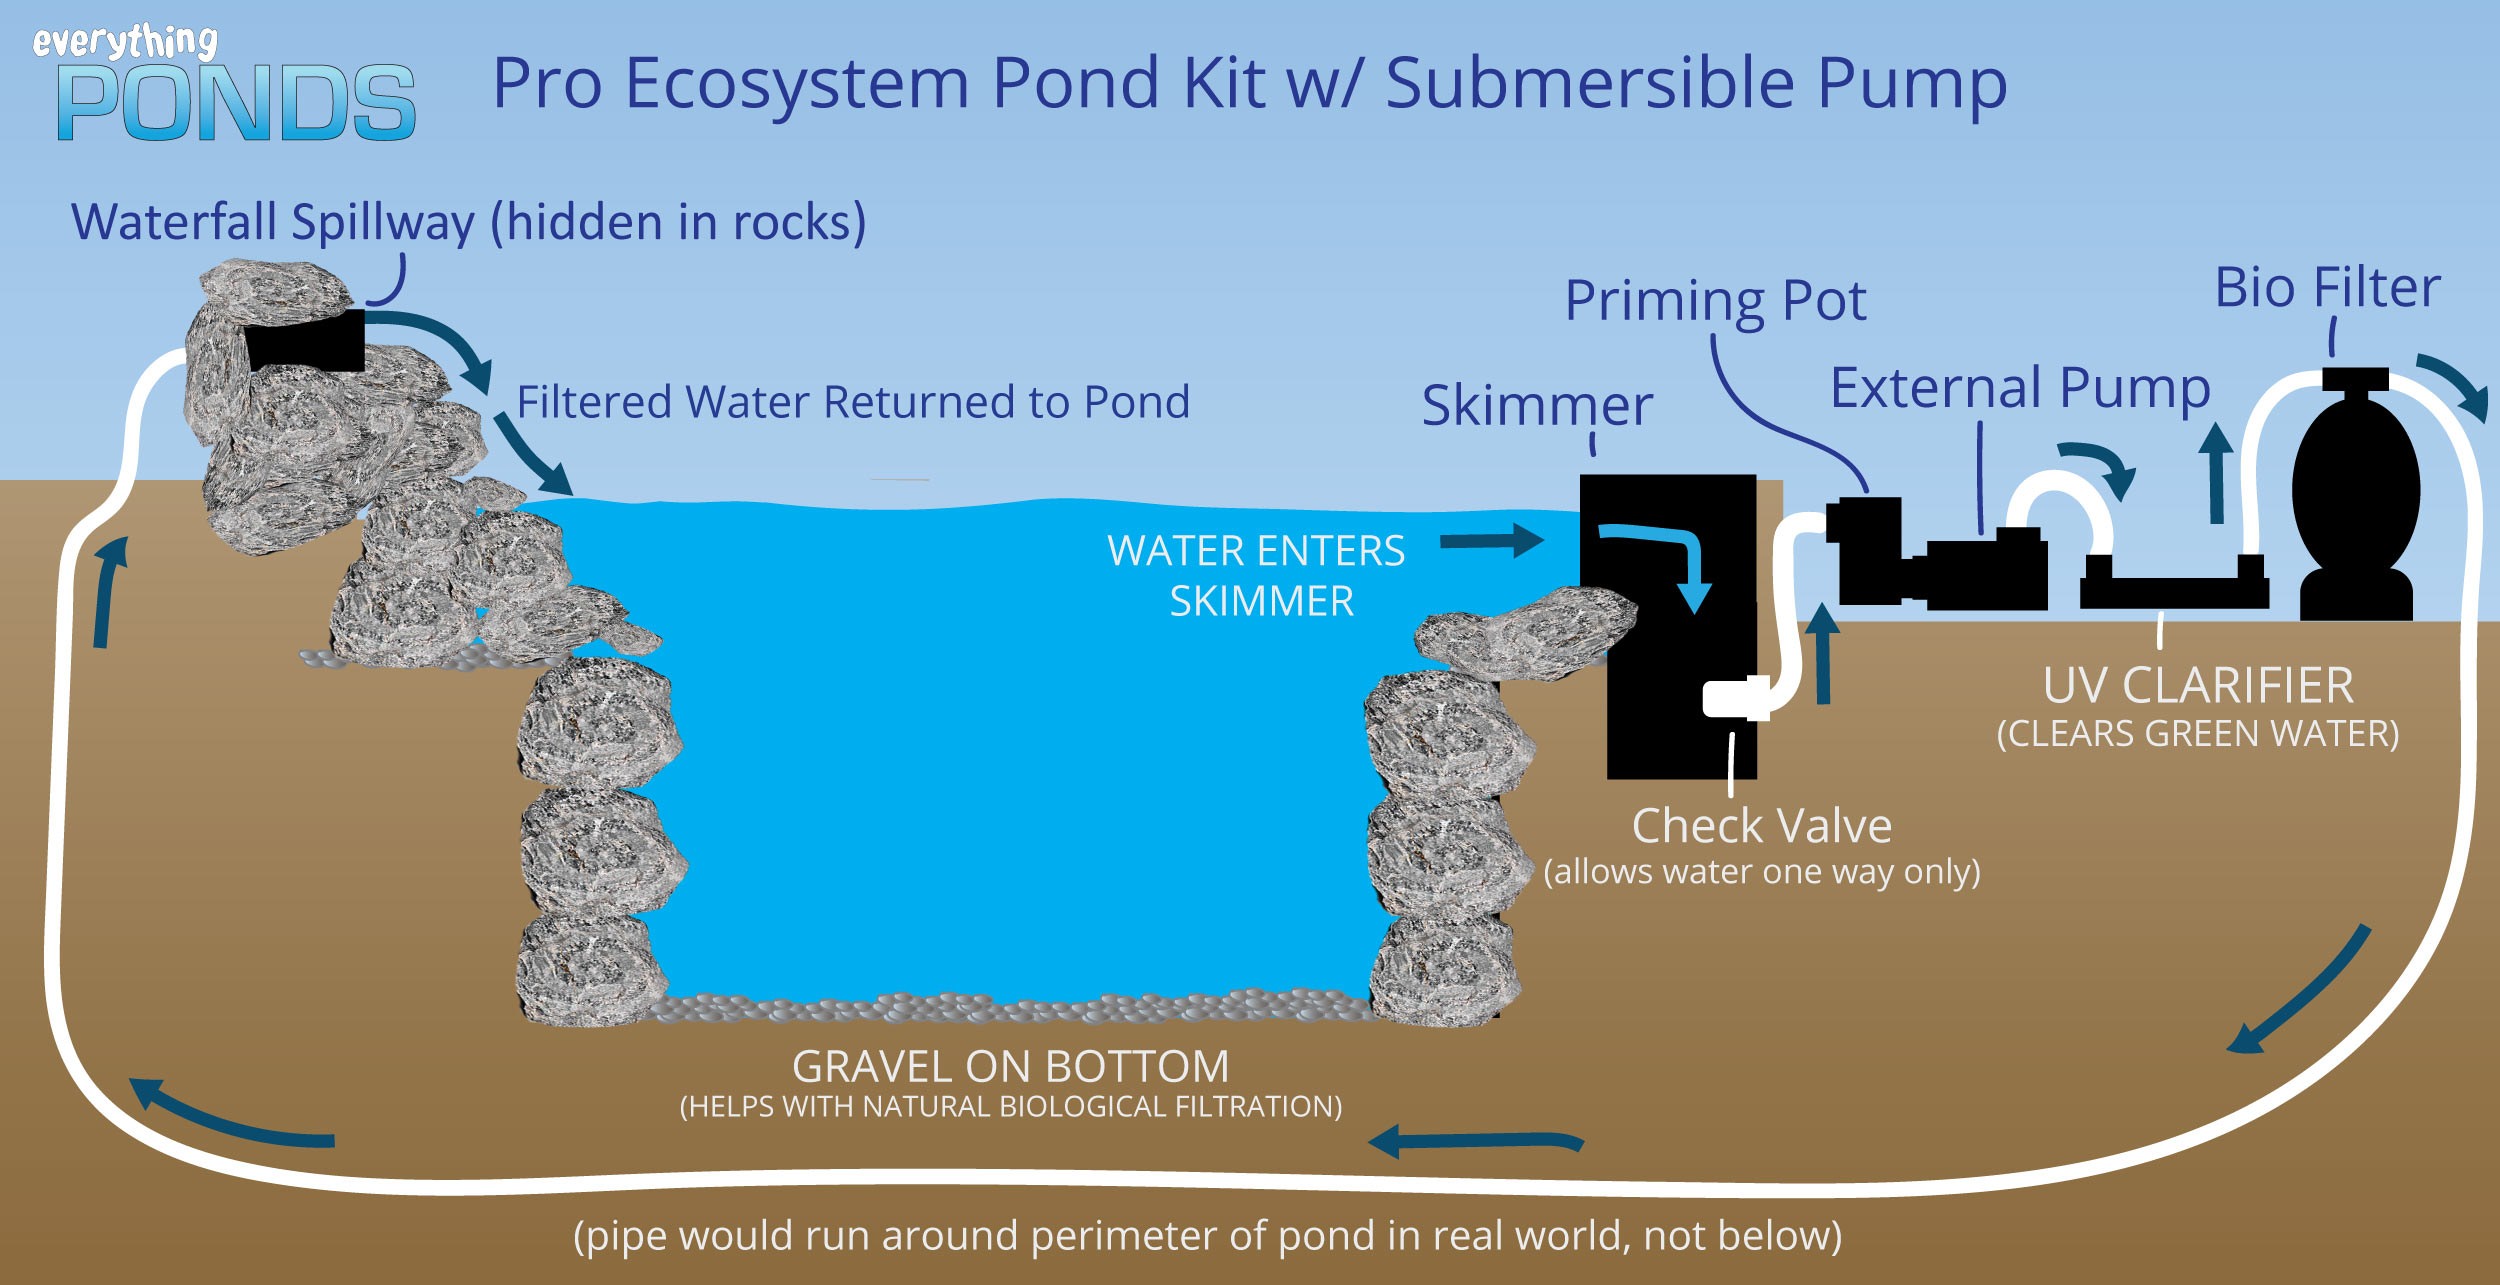 Pro Ecosystem Pond Kit - External pump - 2100 gph